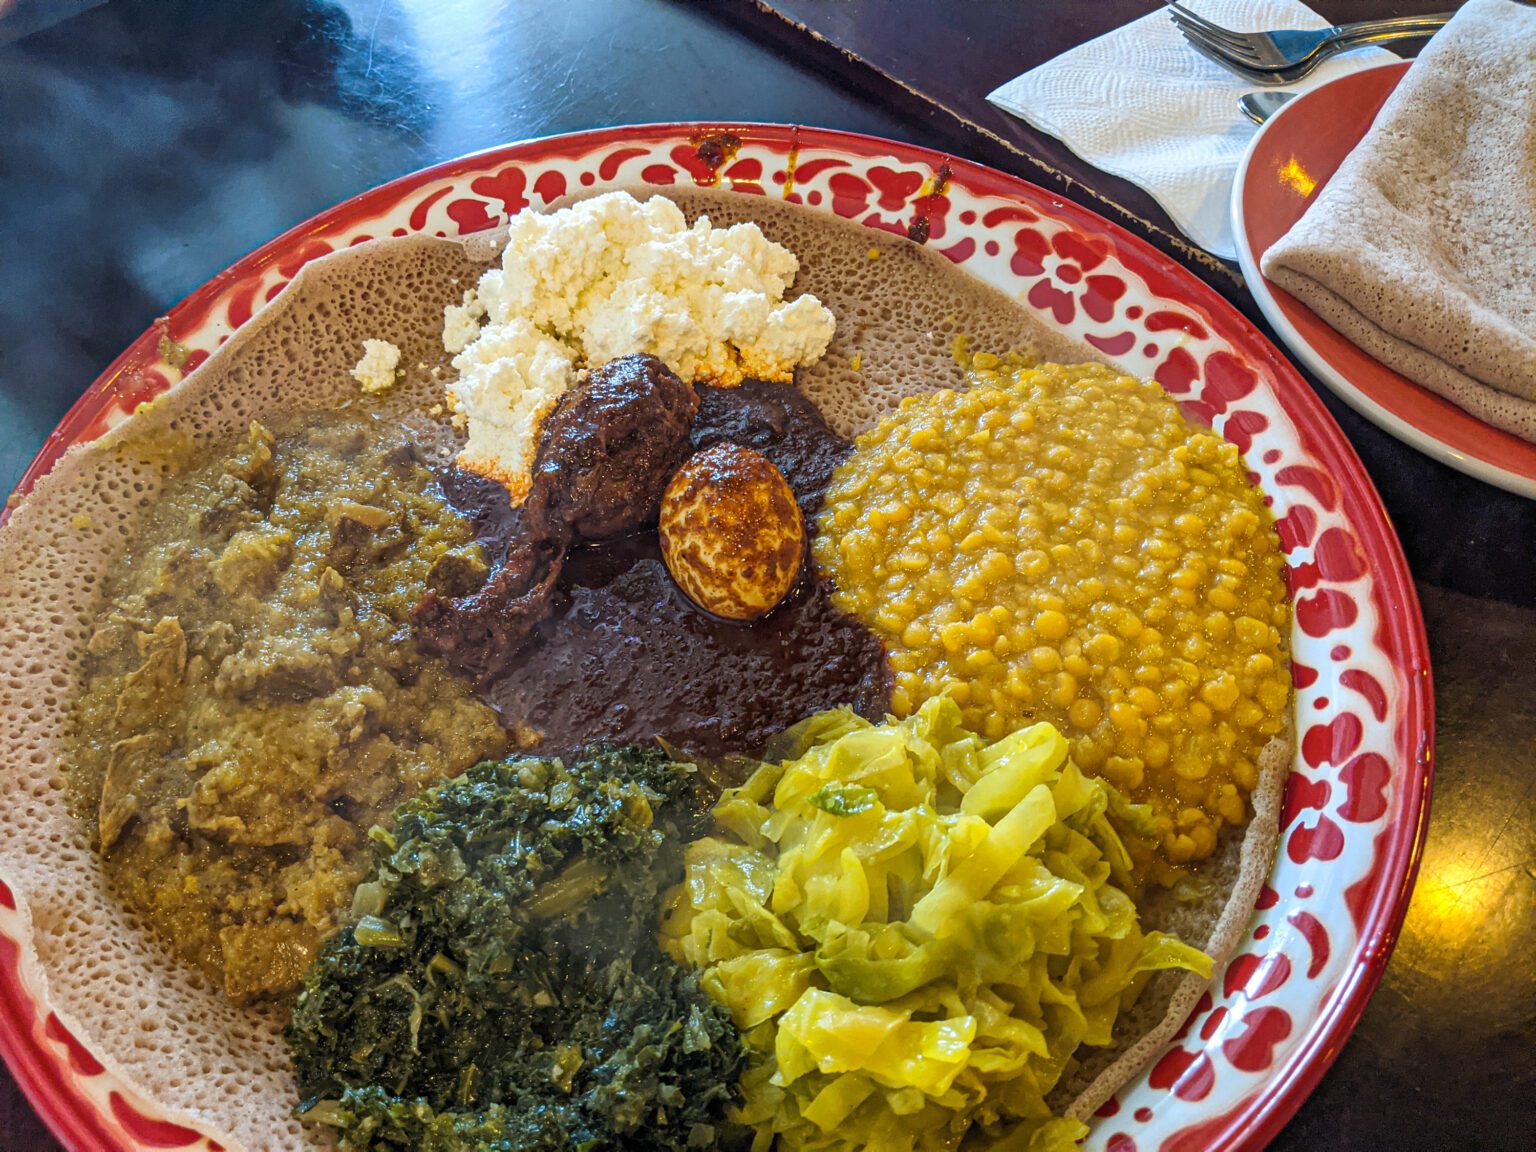 The menu at Ambo Ethiopian Cuisine is short